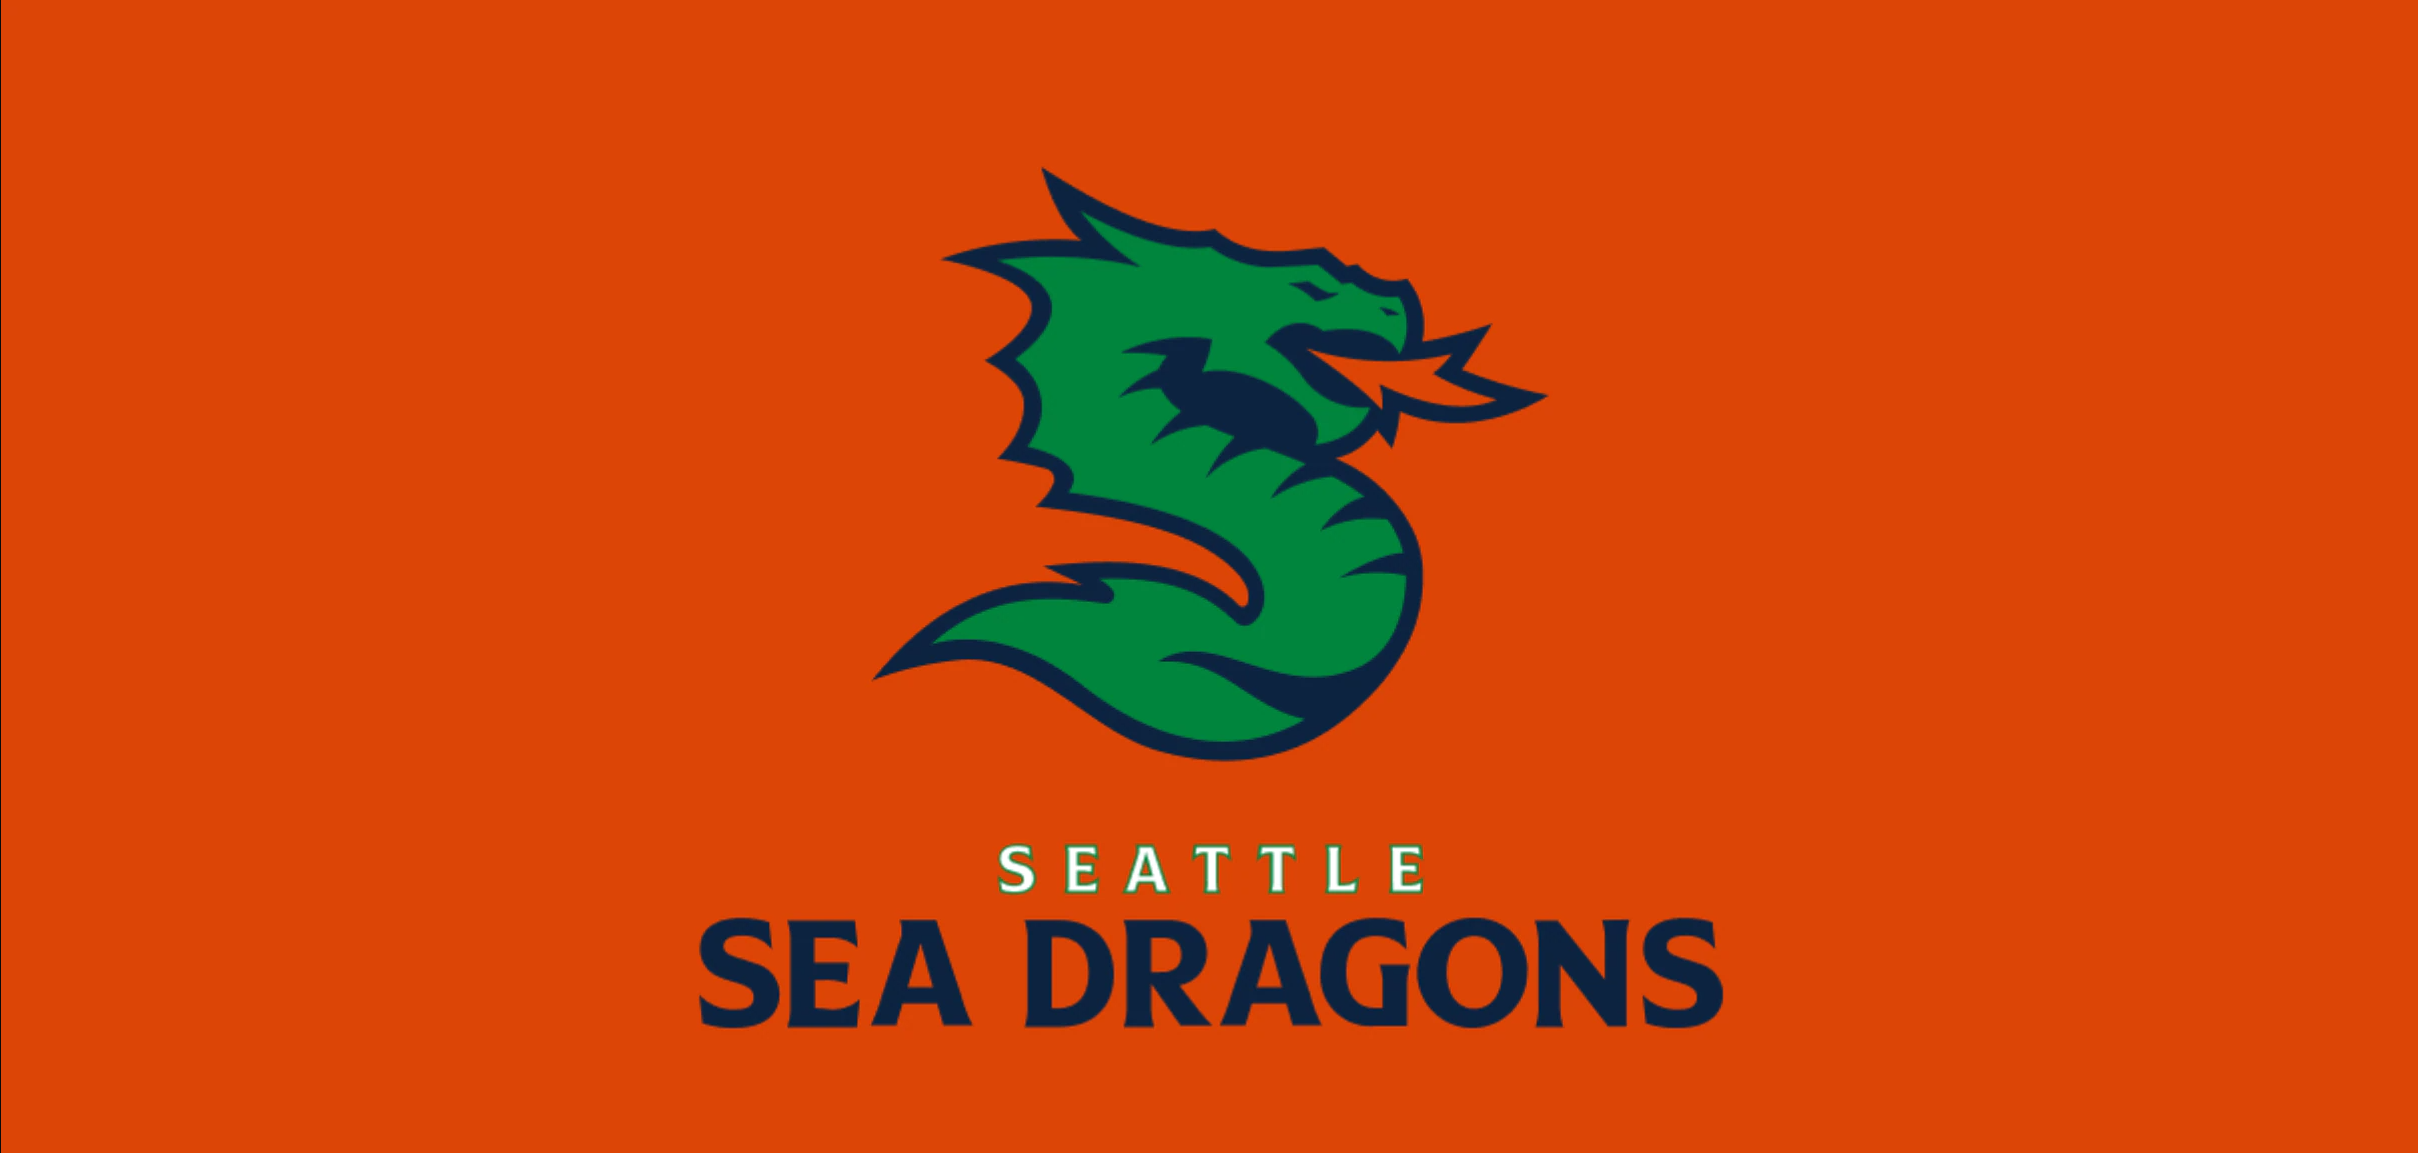 Seattle Sea Dragons Announce Their Quarterbacks, Montez & DiNucci